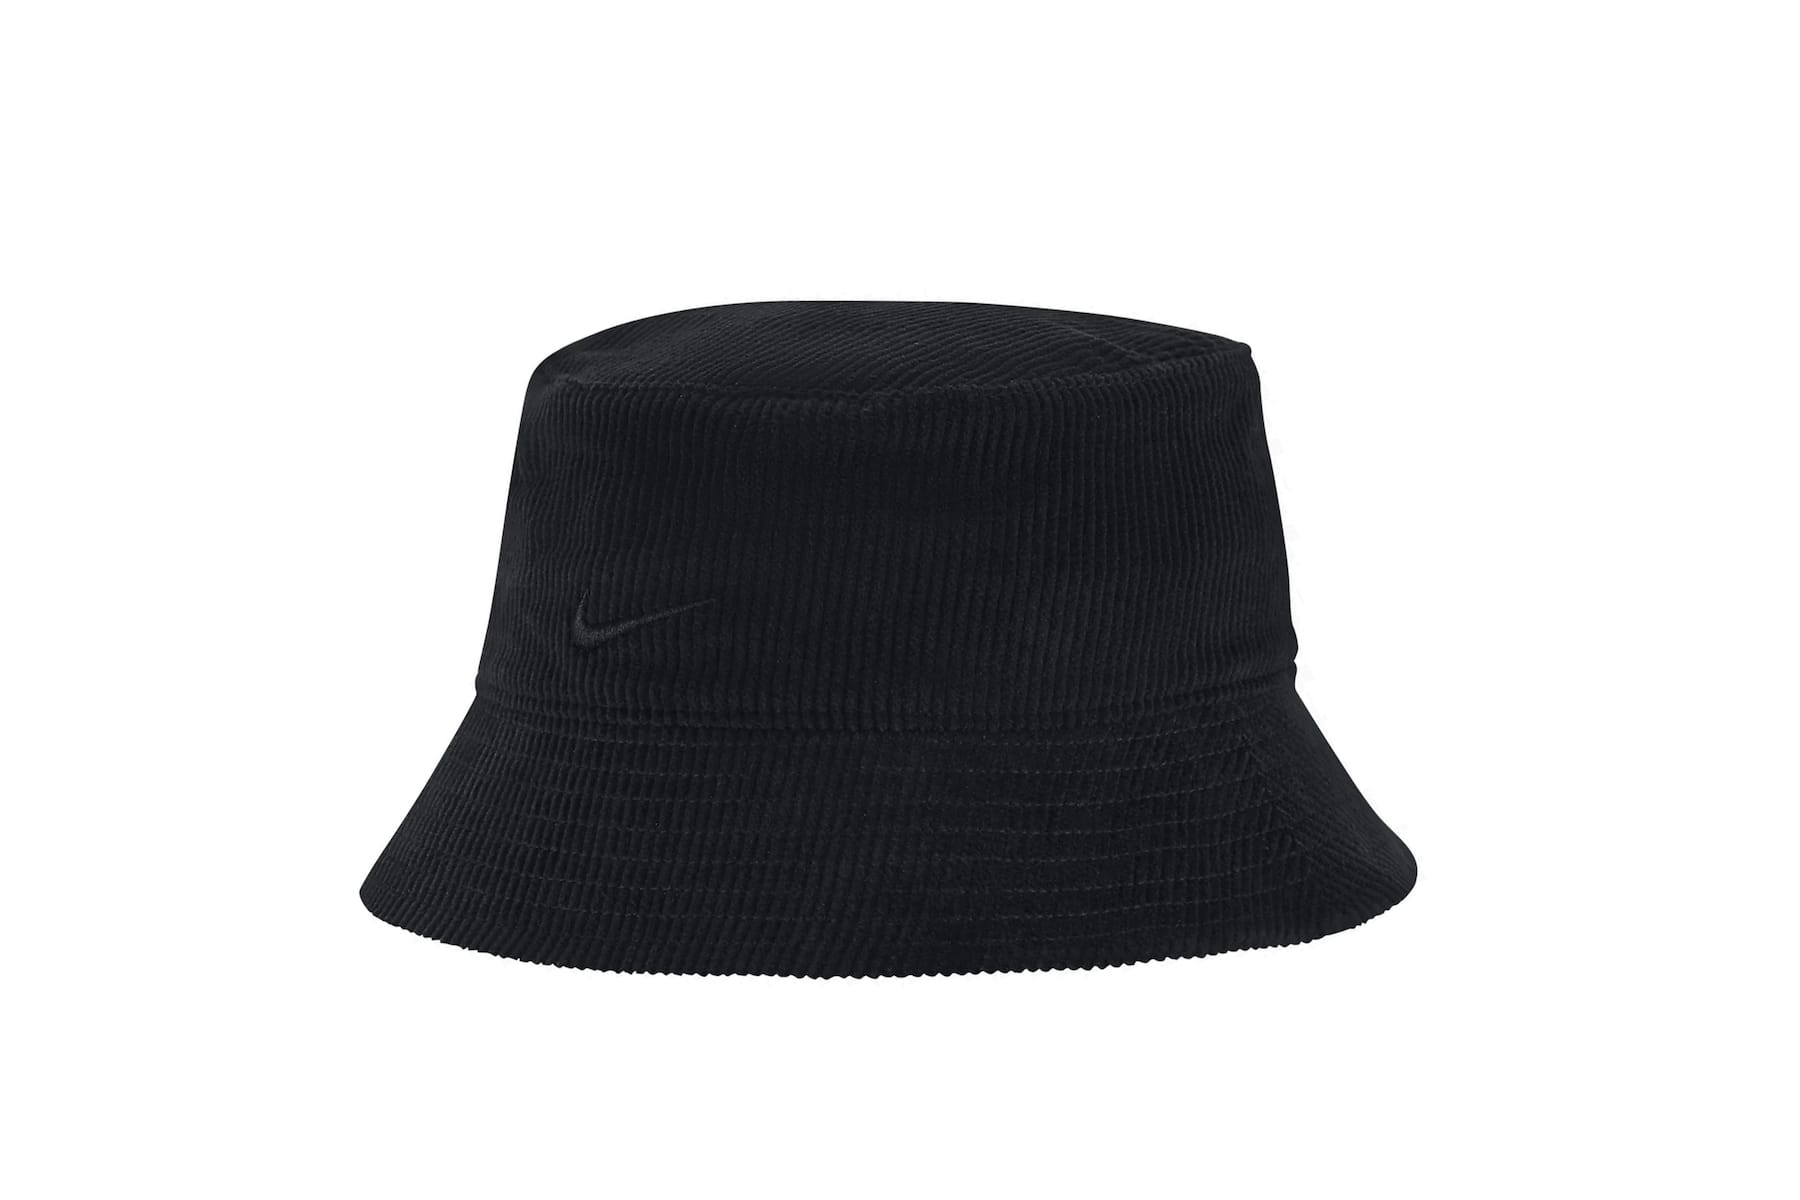 black nike bucket hat